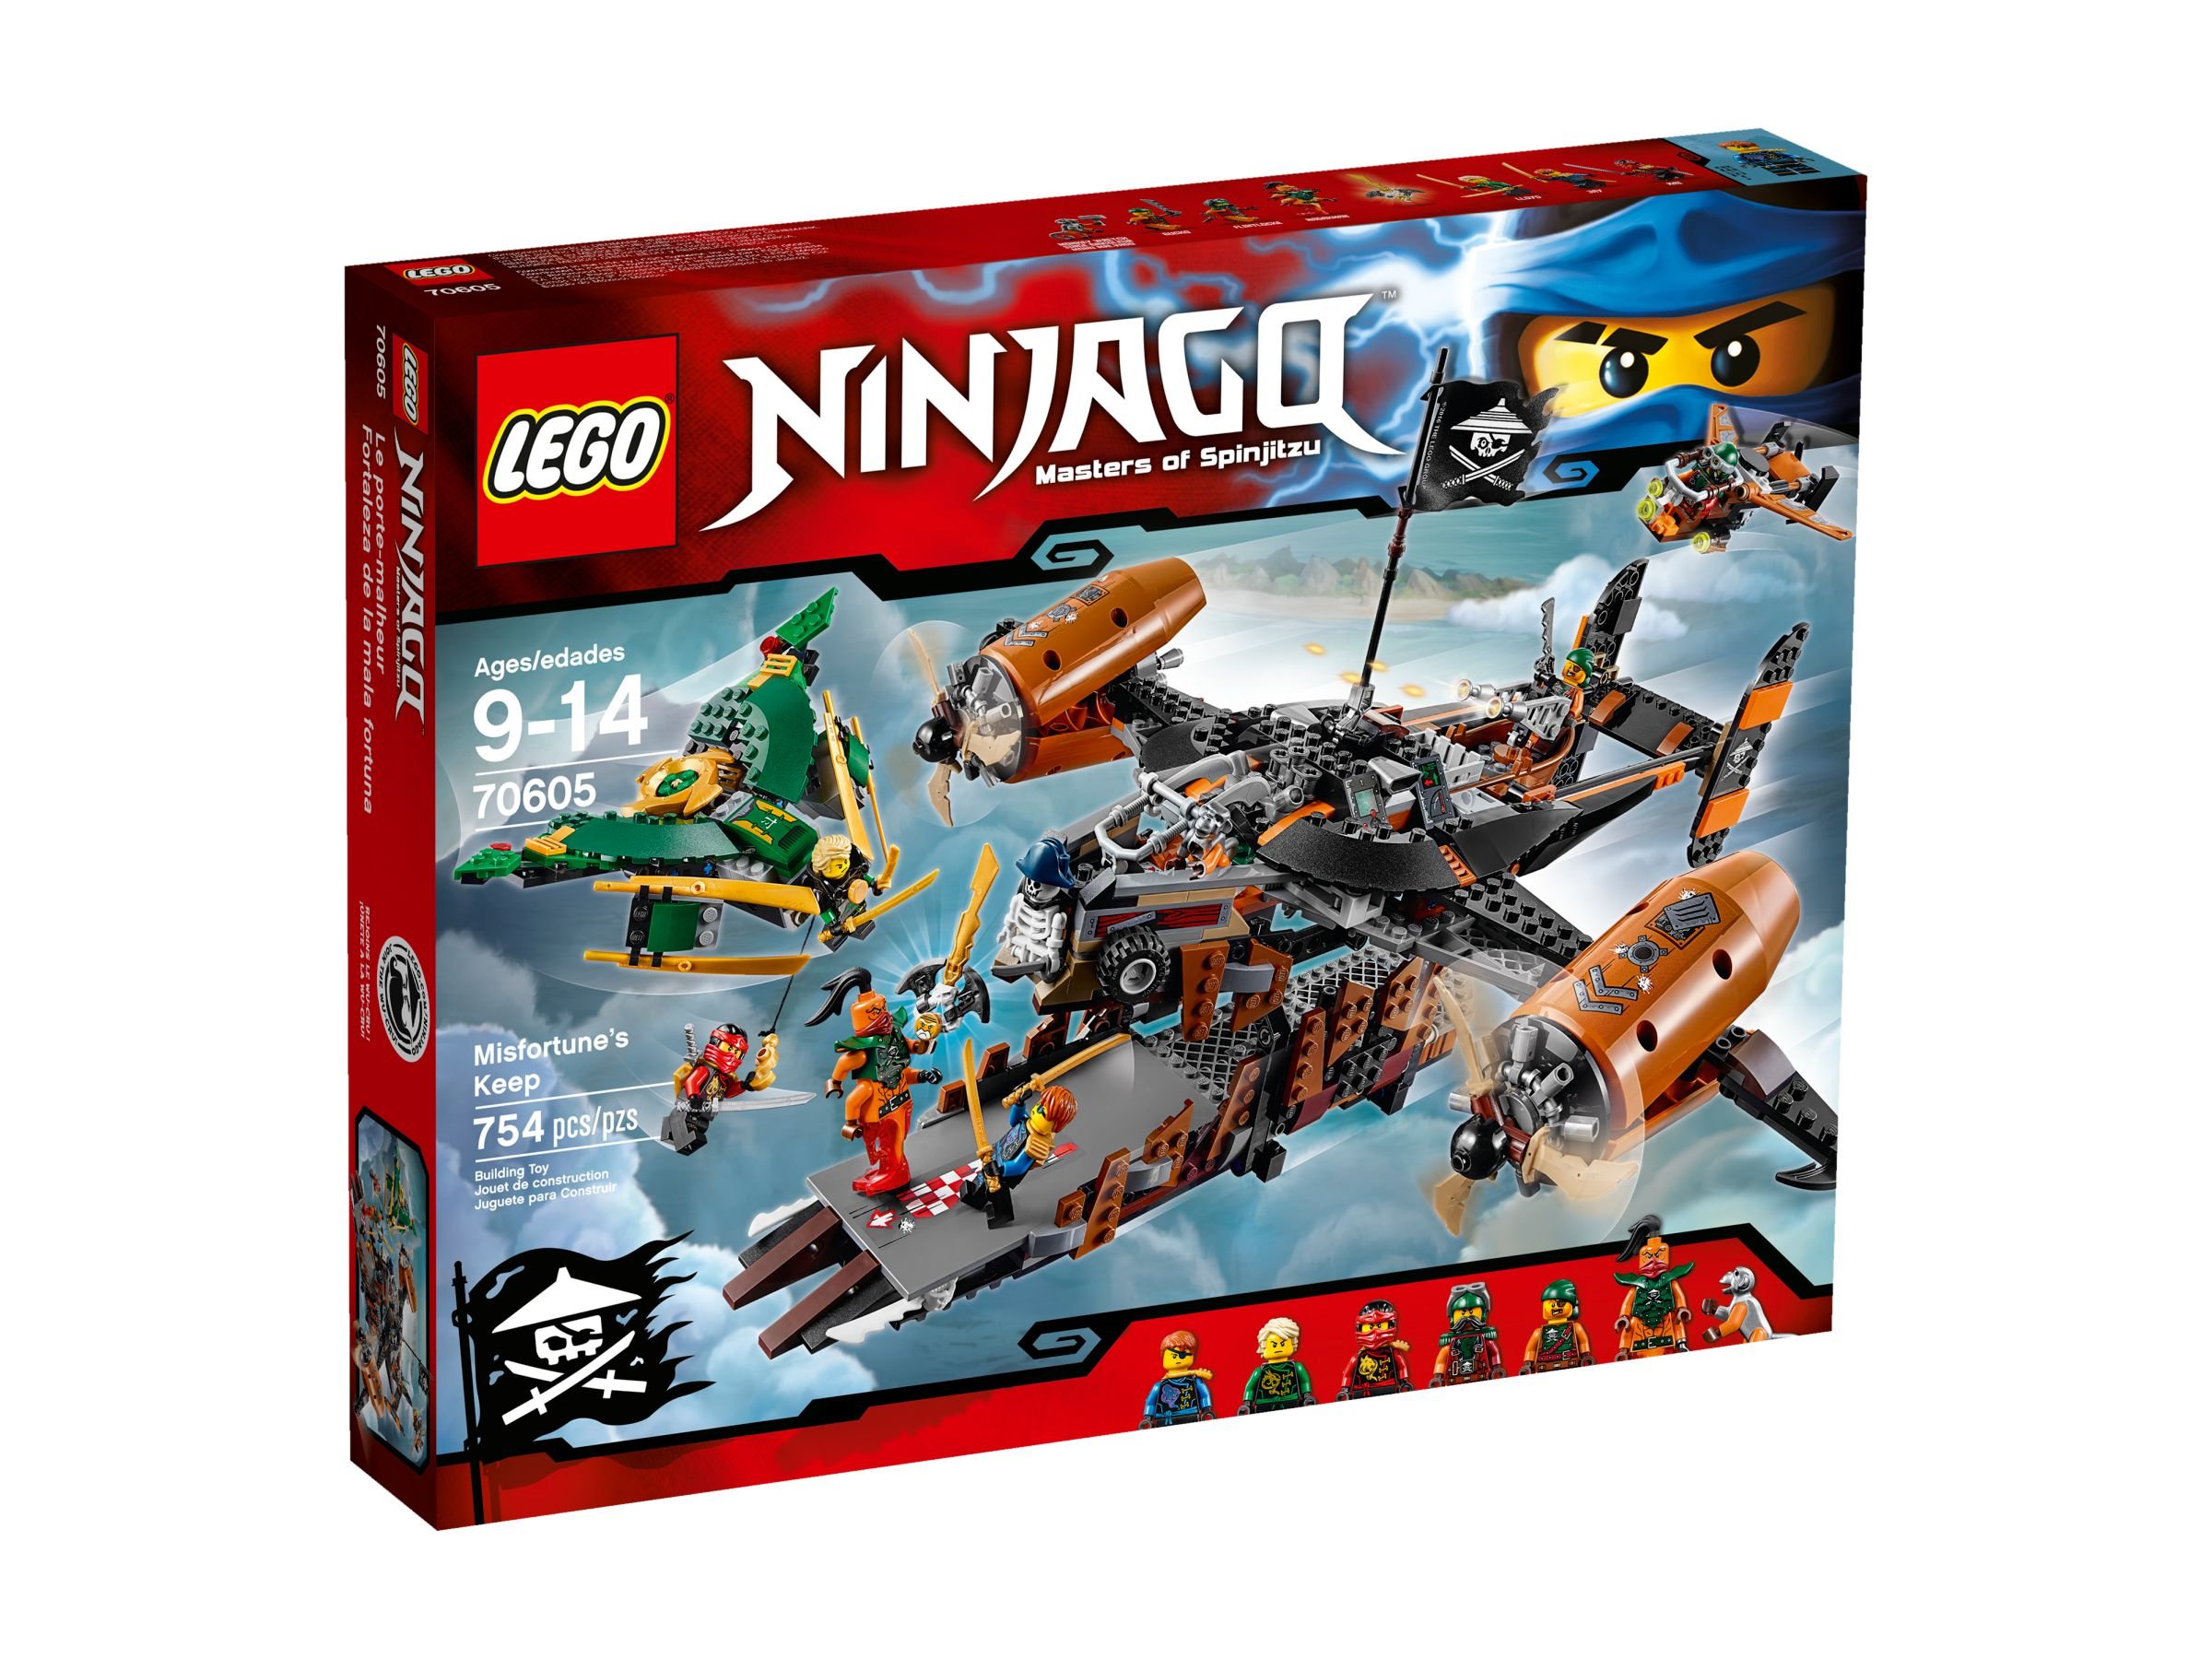 LEGO Ninjago 70605 Luftschiff des Unglücks LEGO_70605_alt1.jpg